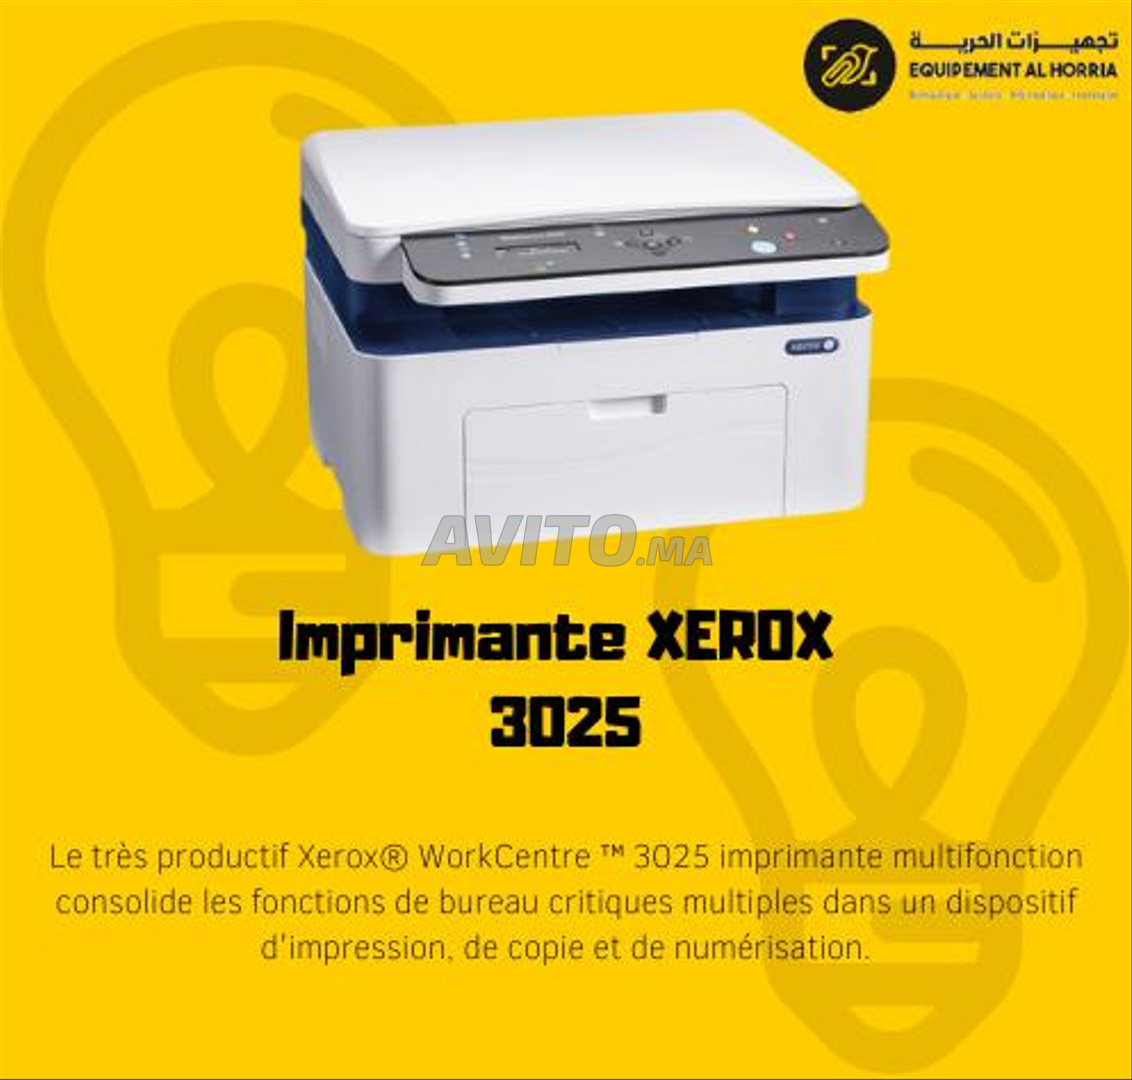 Imprimante XEROX 3025 - 2